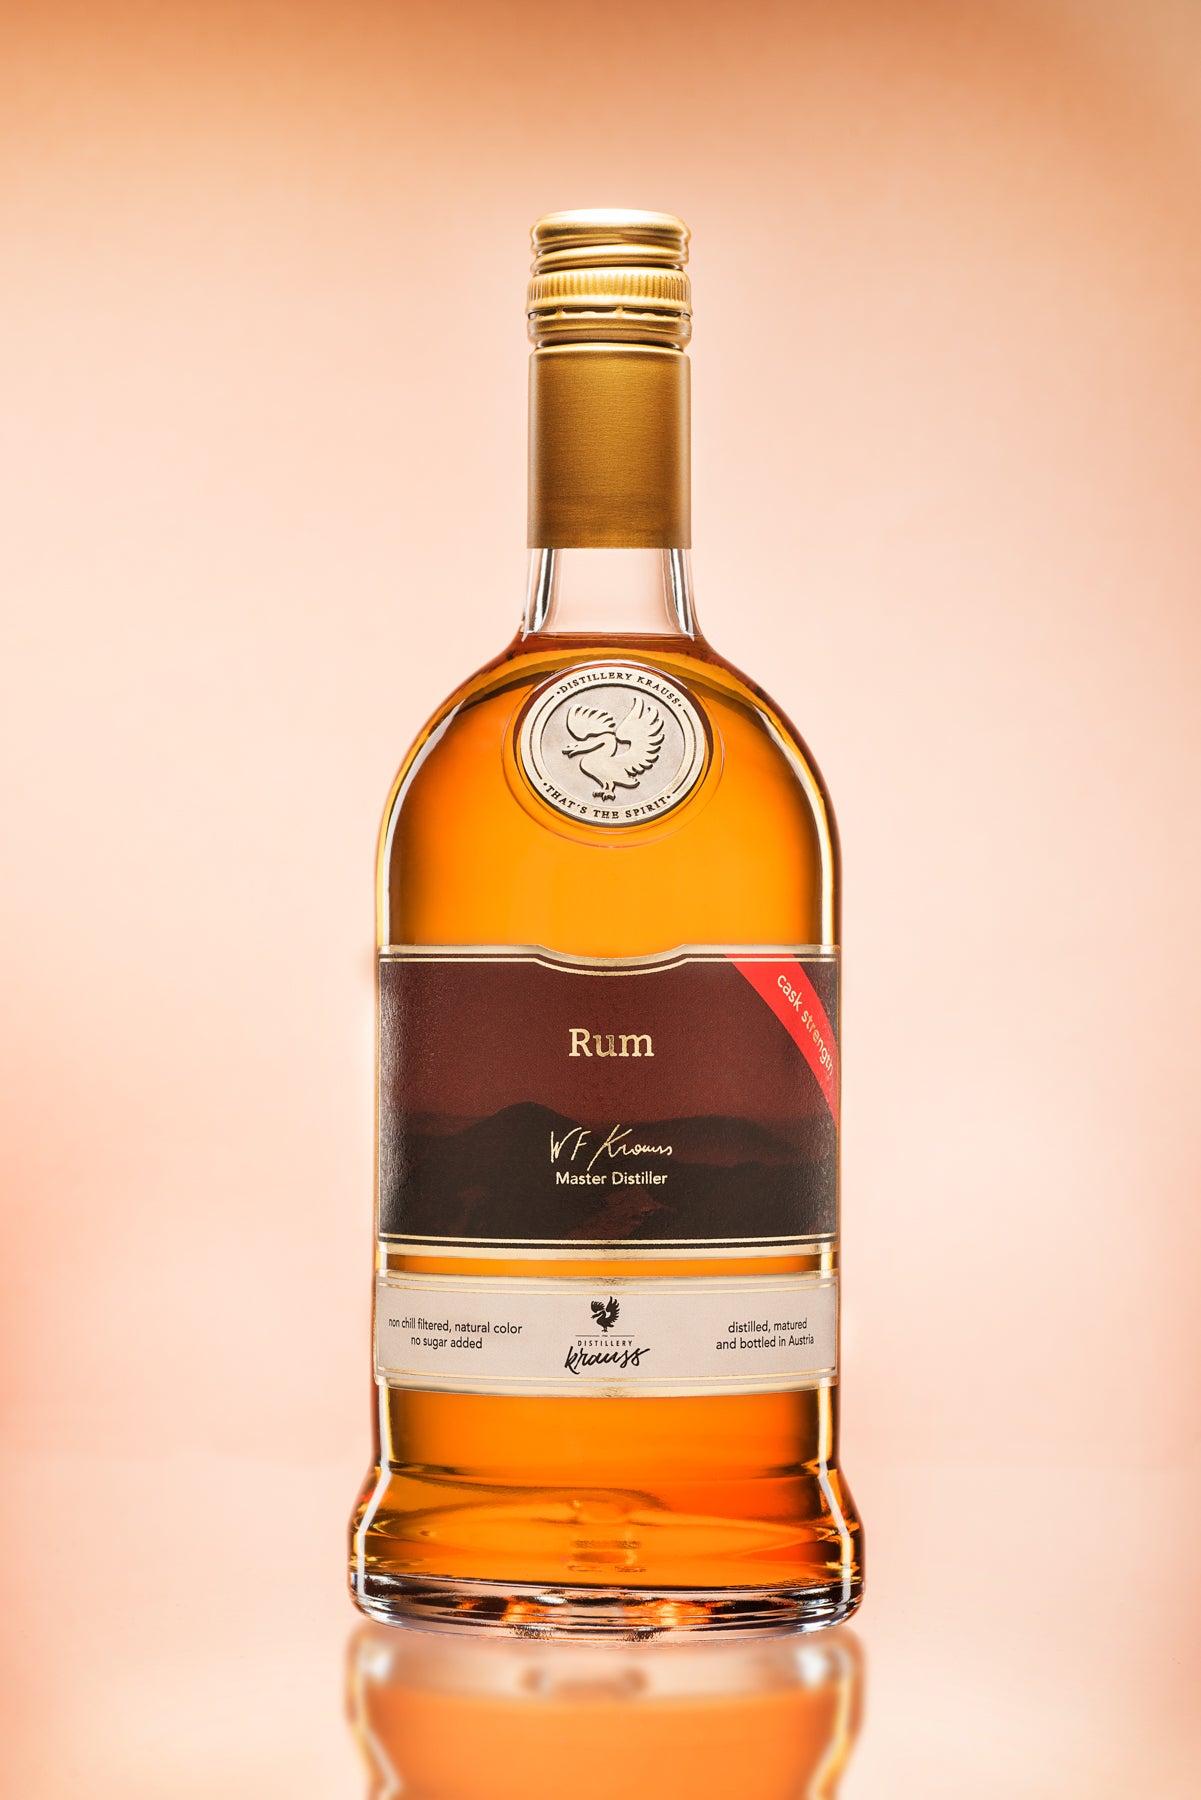 Rum cask strength, unfiltered